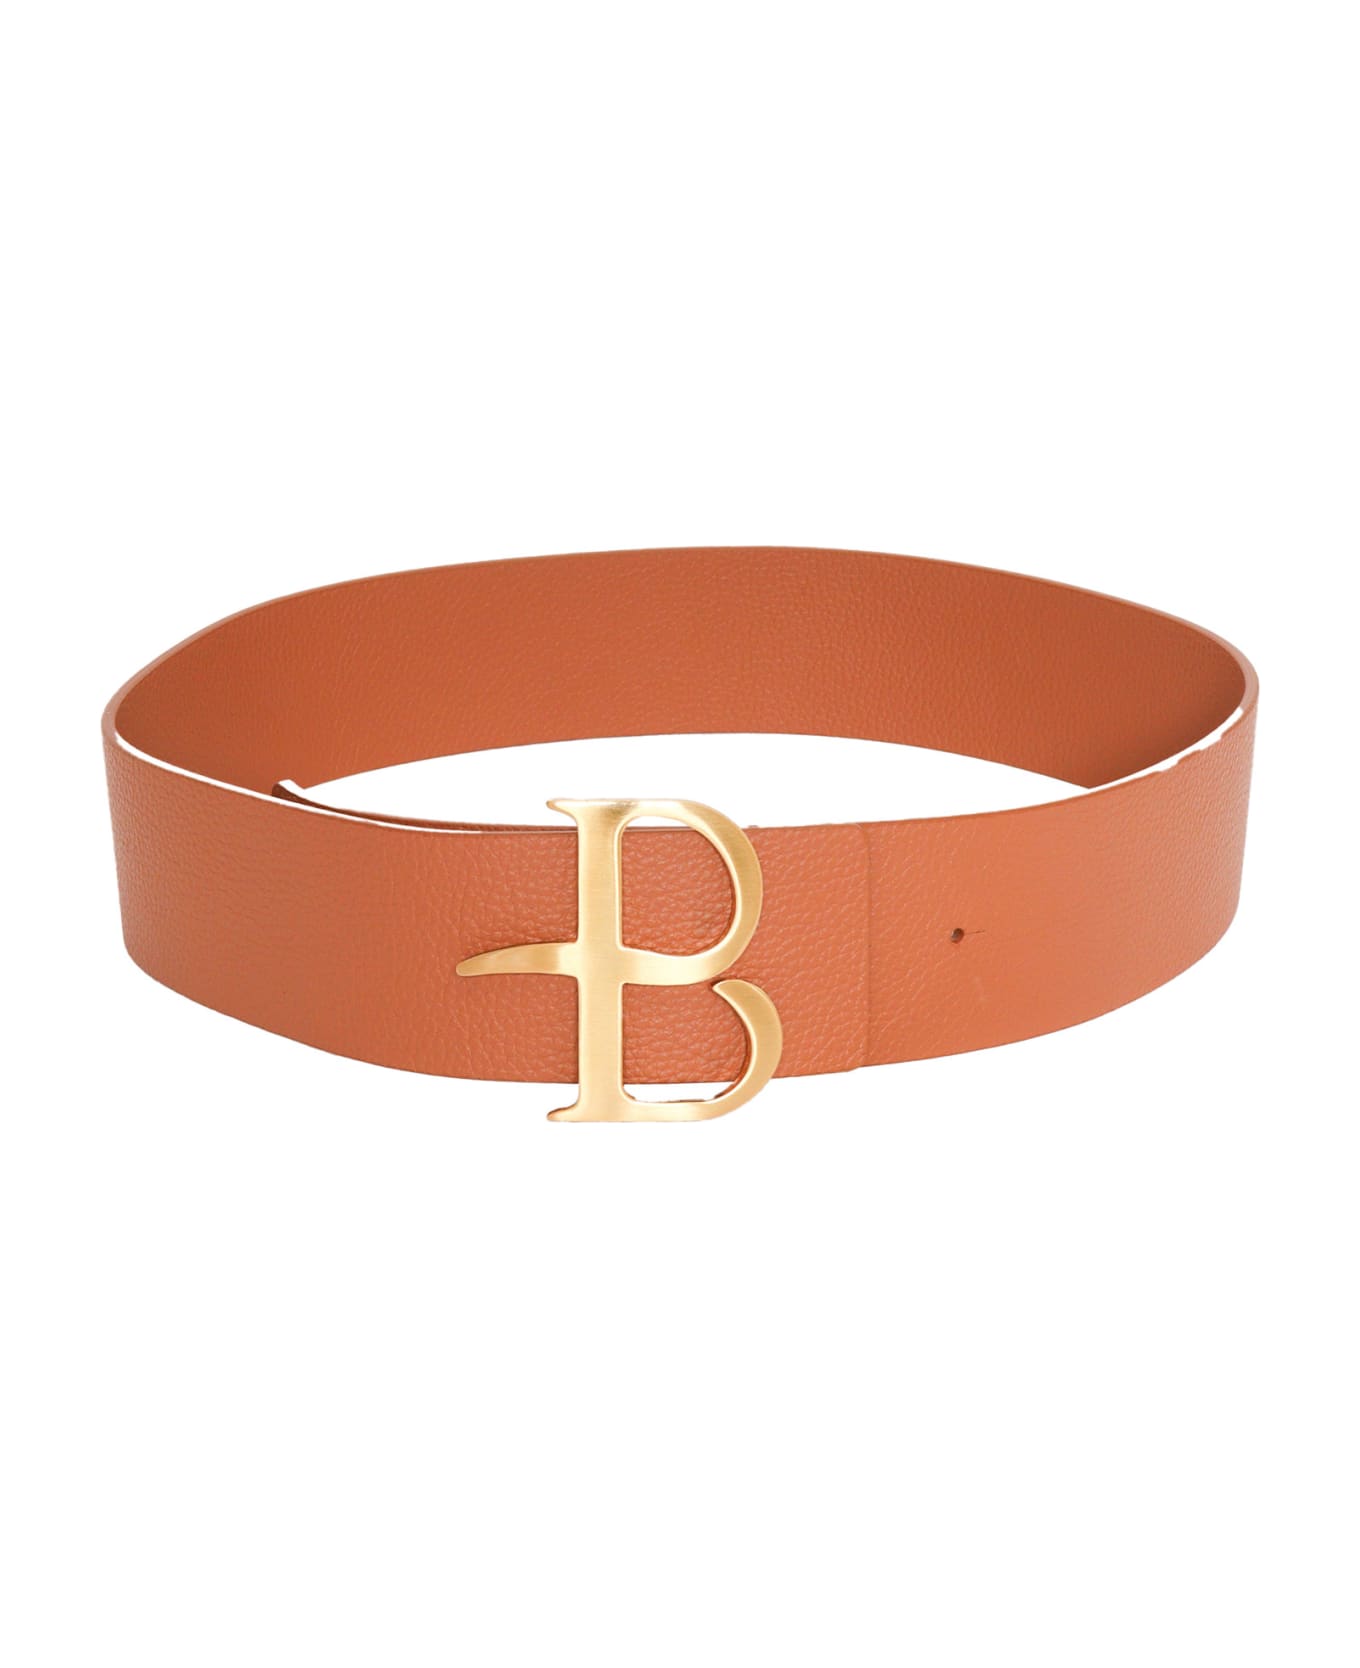 Ballantyne B Belt - BROWN ベルト